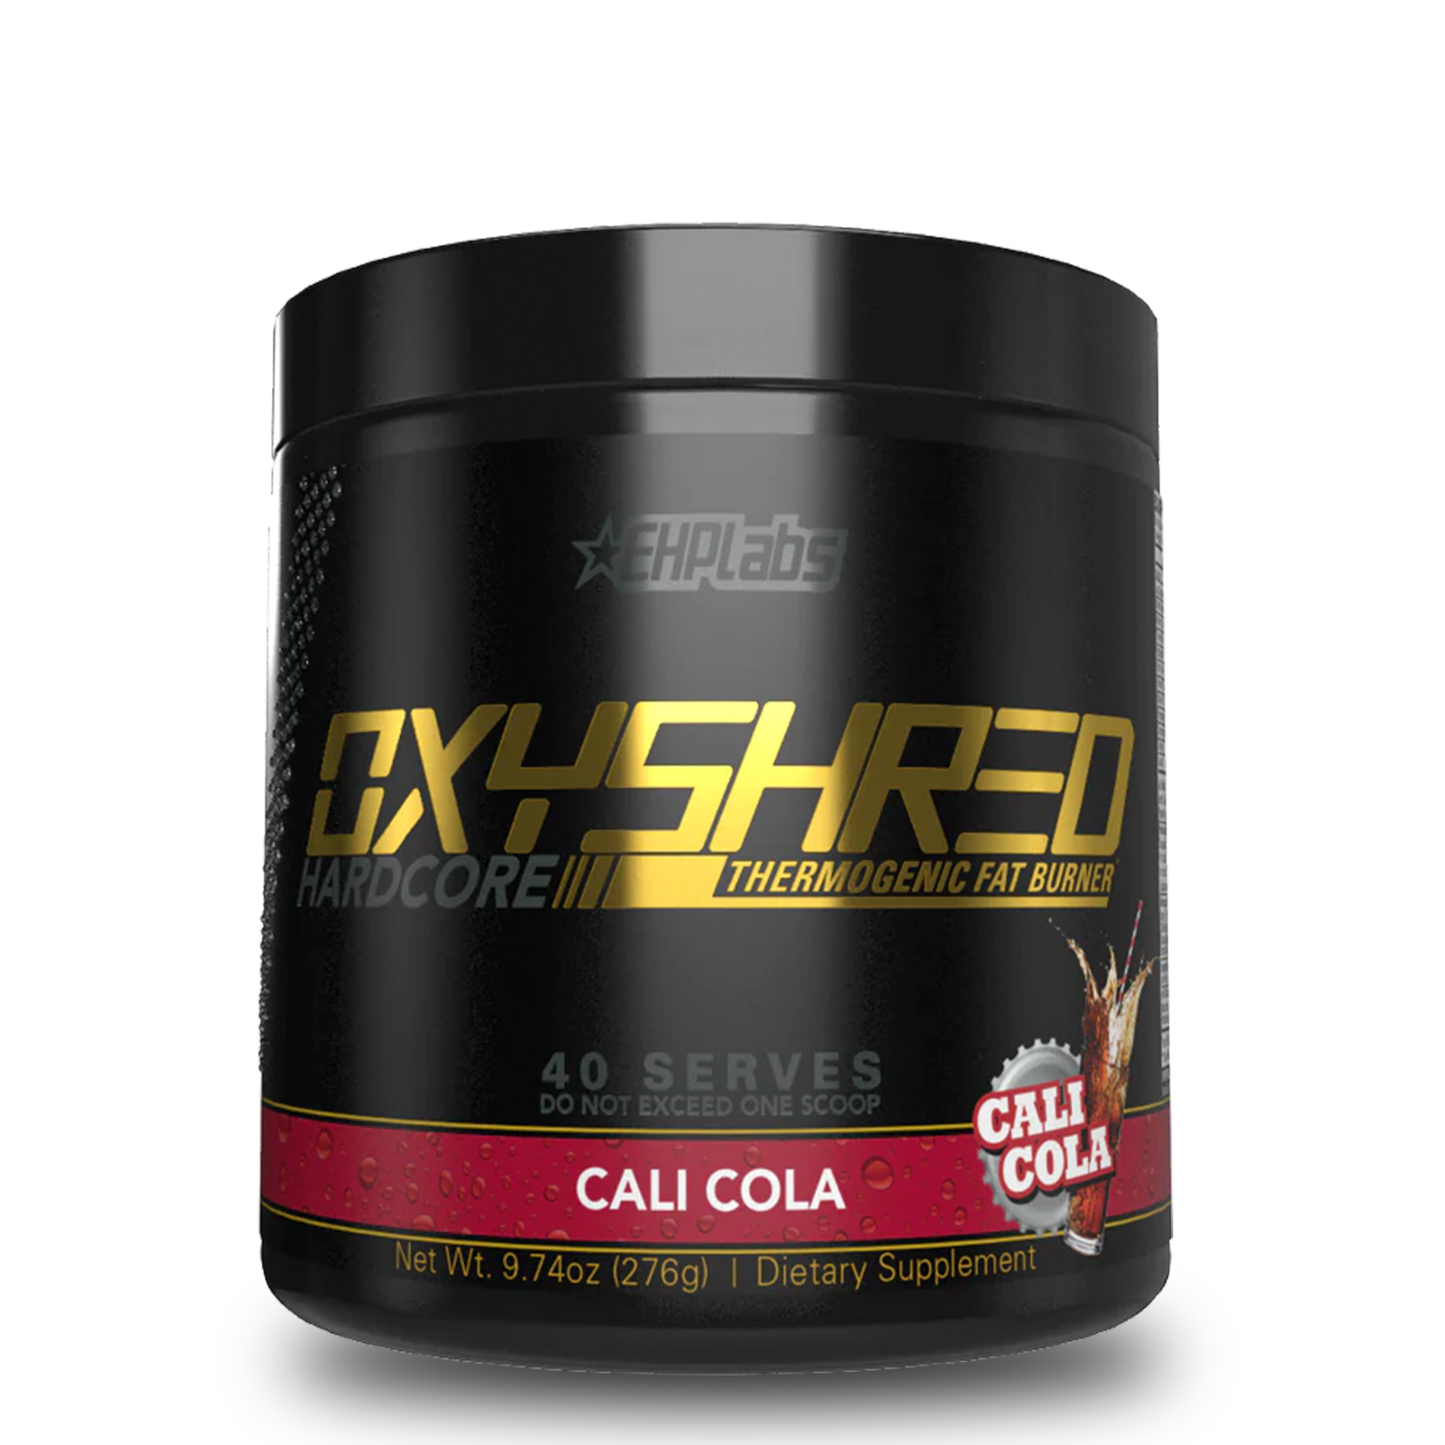 oxyshred-hardcore-cali-cola